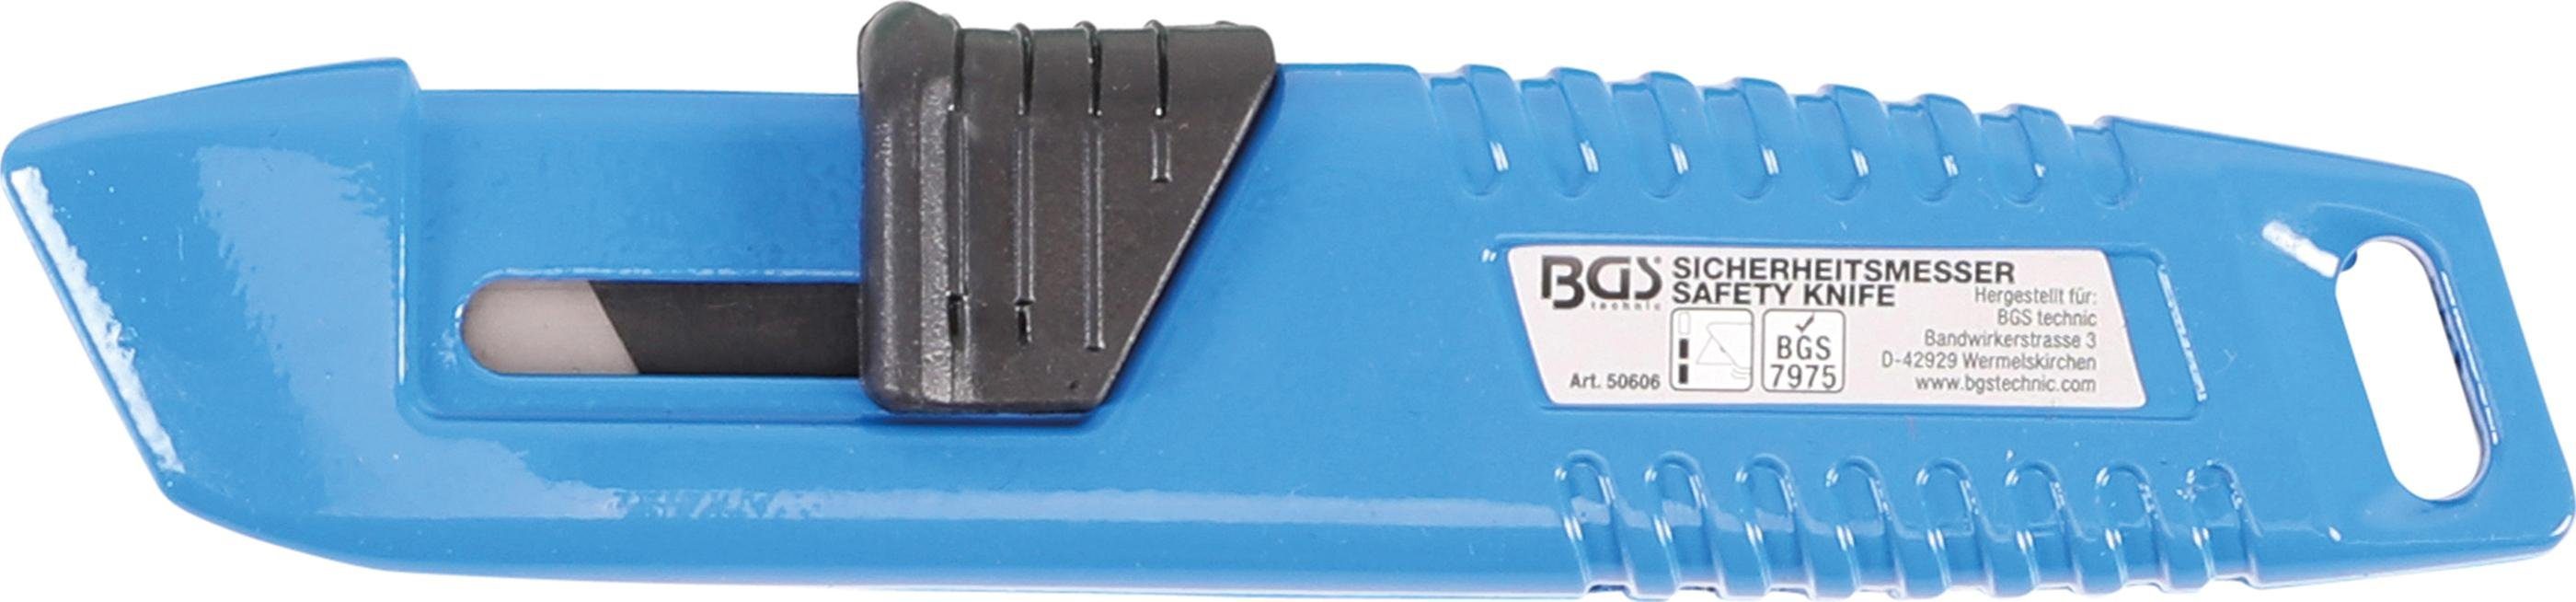 BGS technic Cuttermesser Sicherheitsmesser